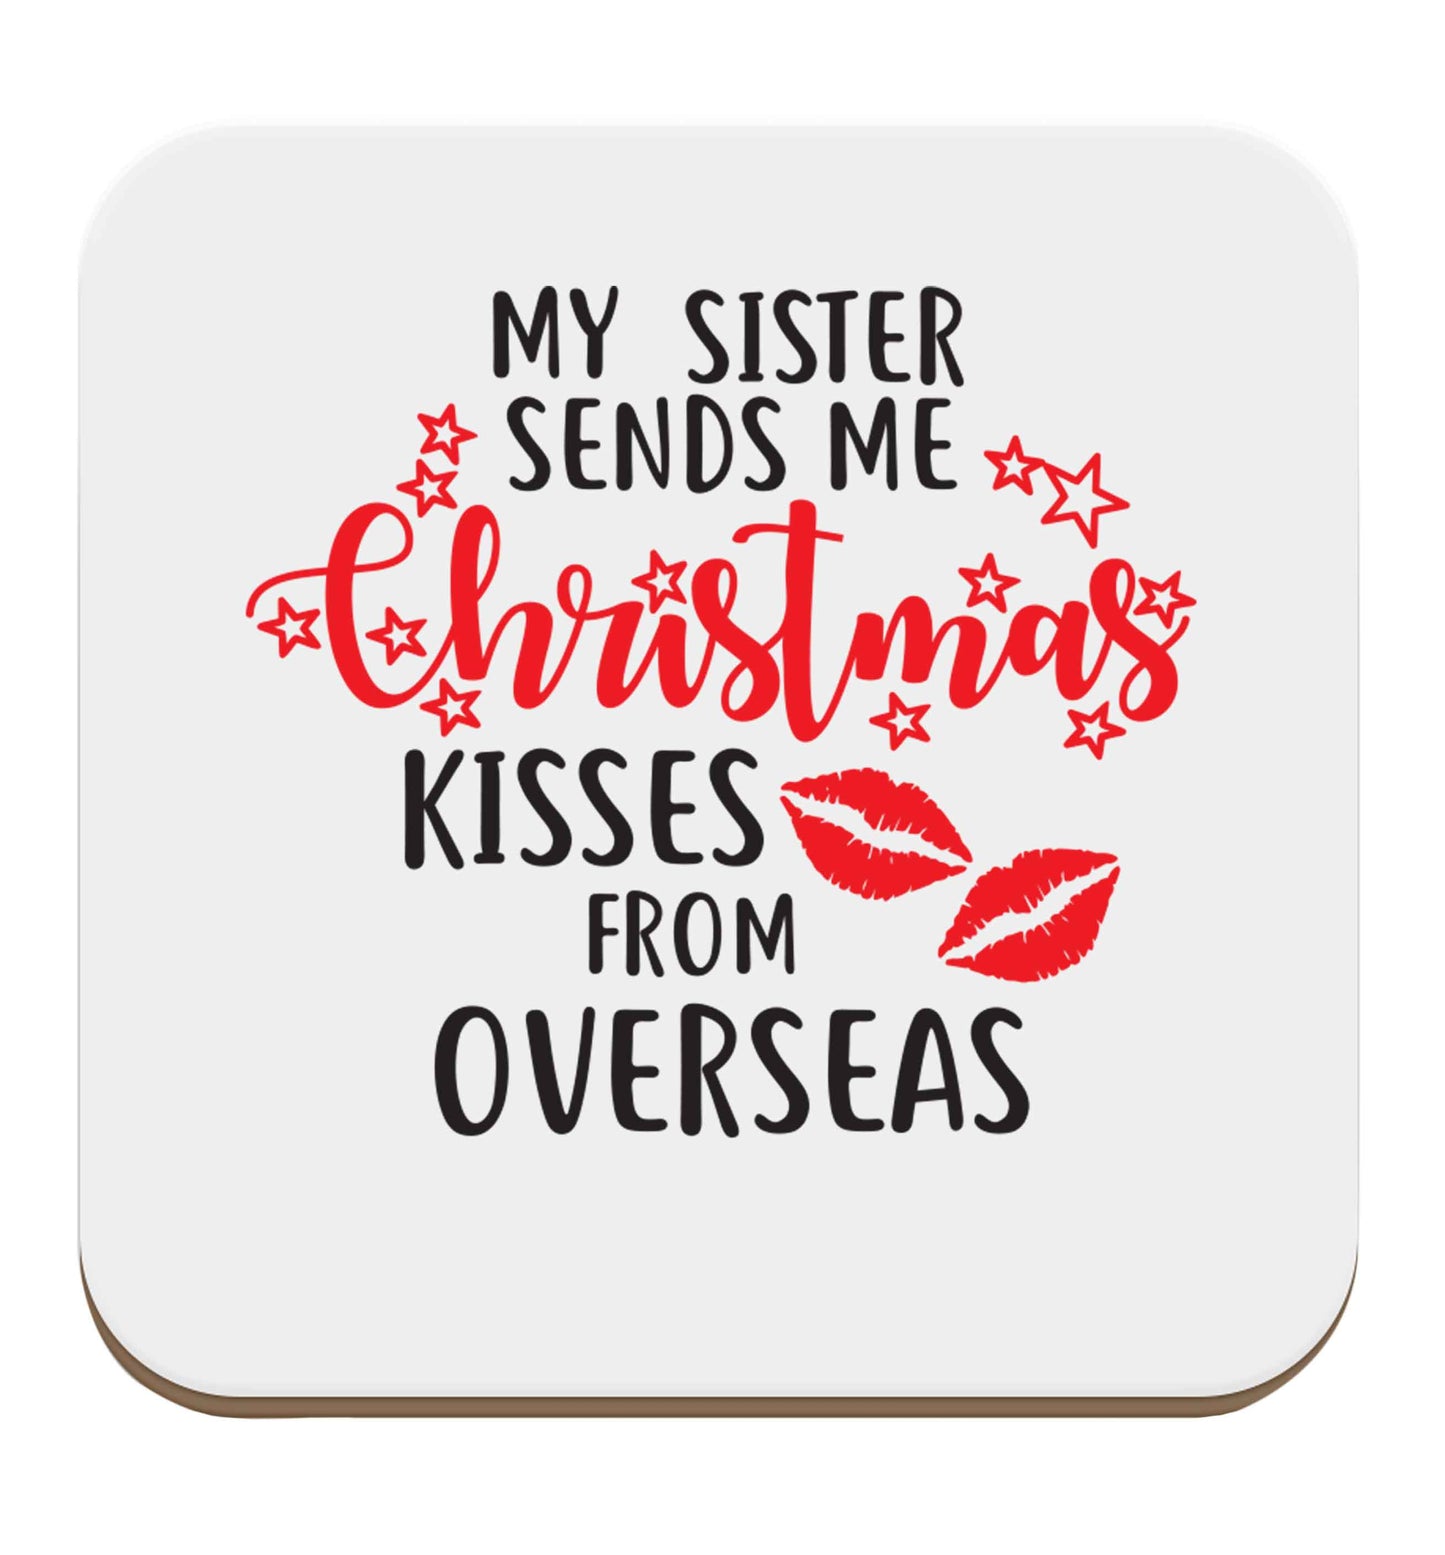 Grandad Christmas Kisses Overseas set of four coasters